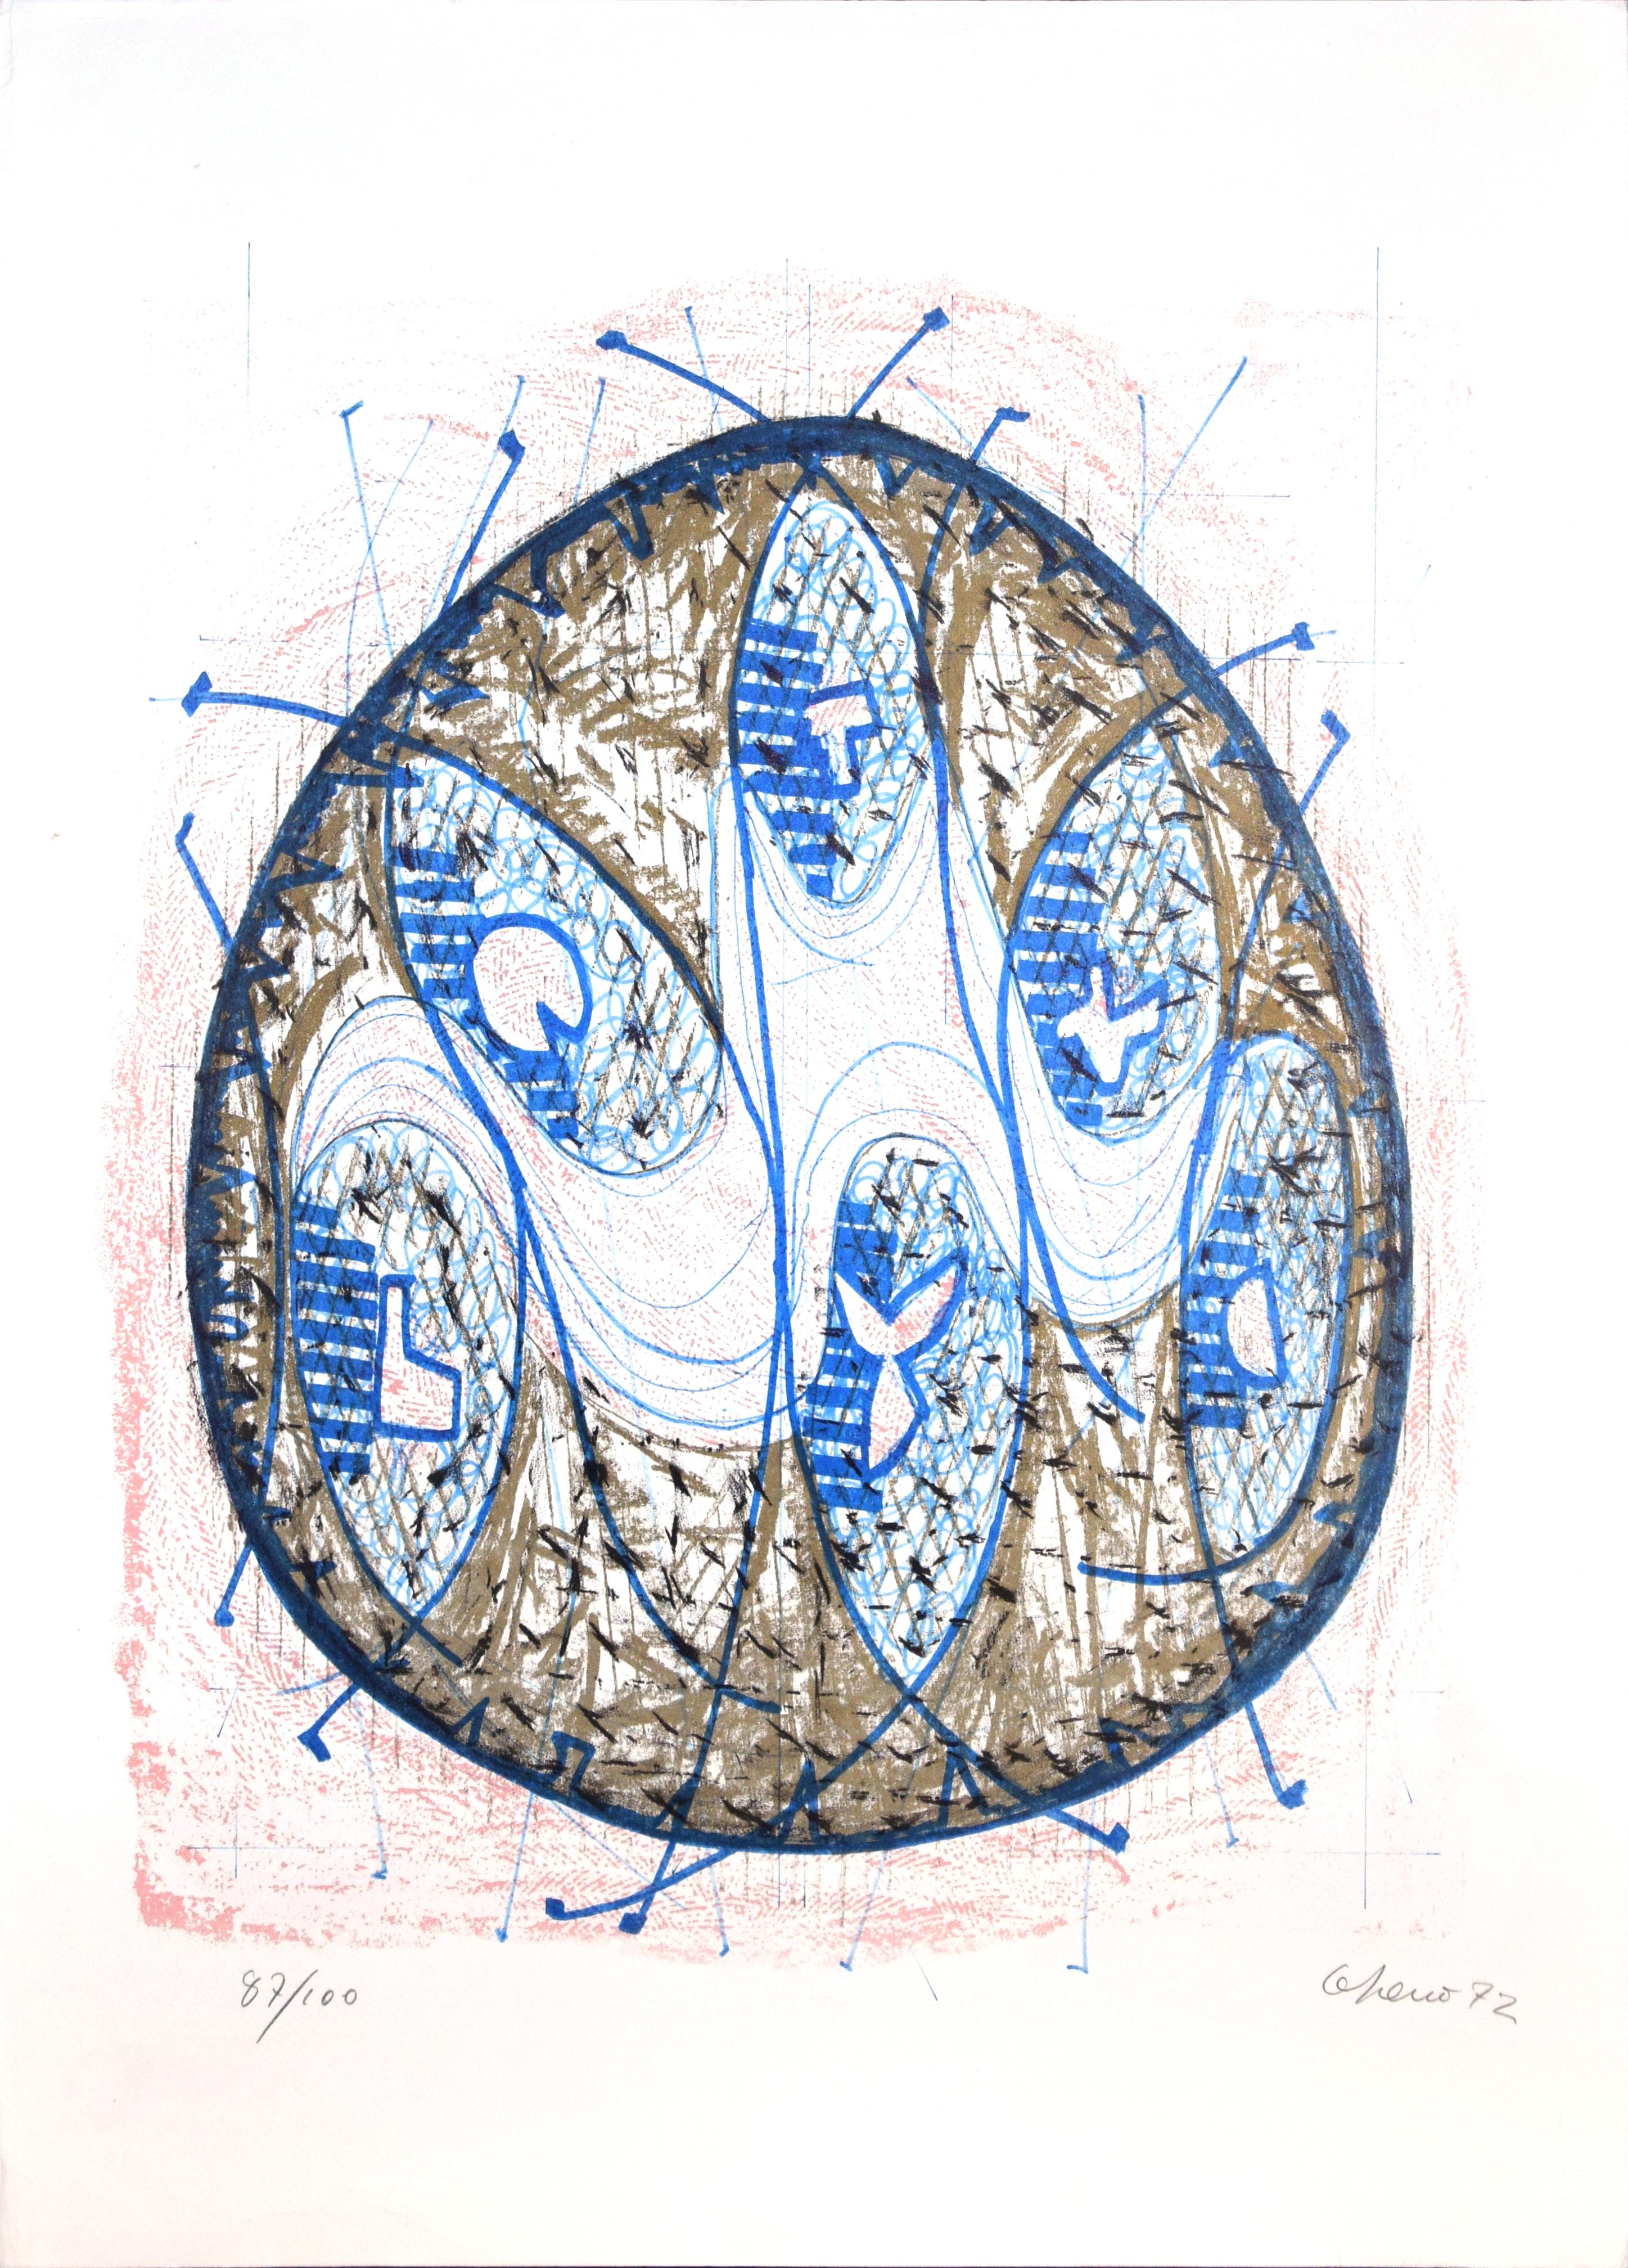 Grey And Blue Composition - 1970s - Luigi Gheno - Lithograph - Contemporary